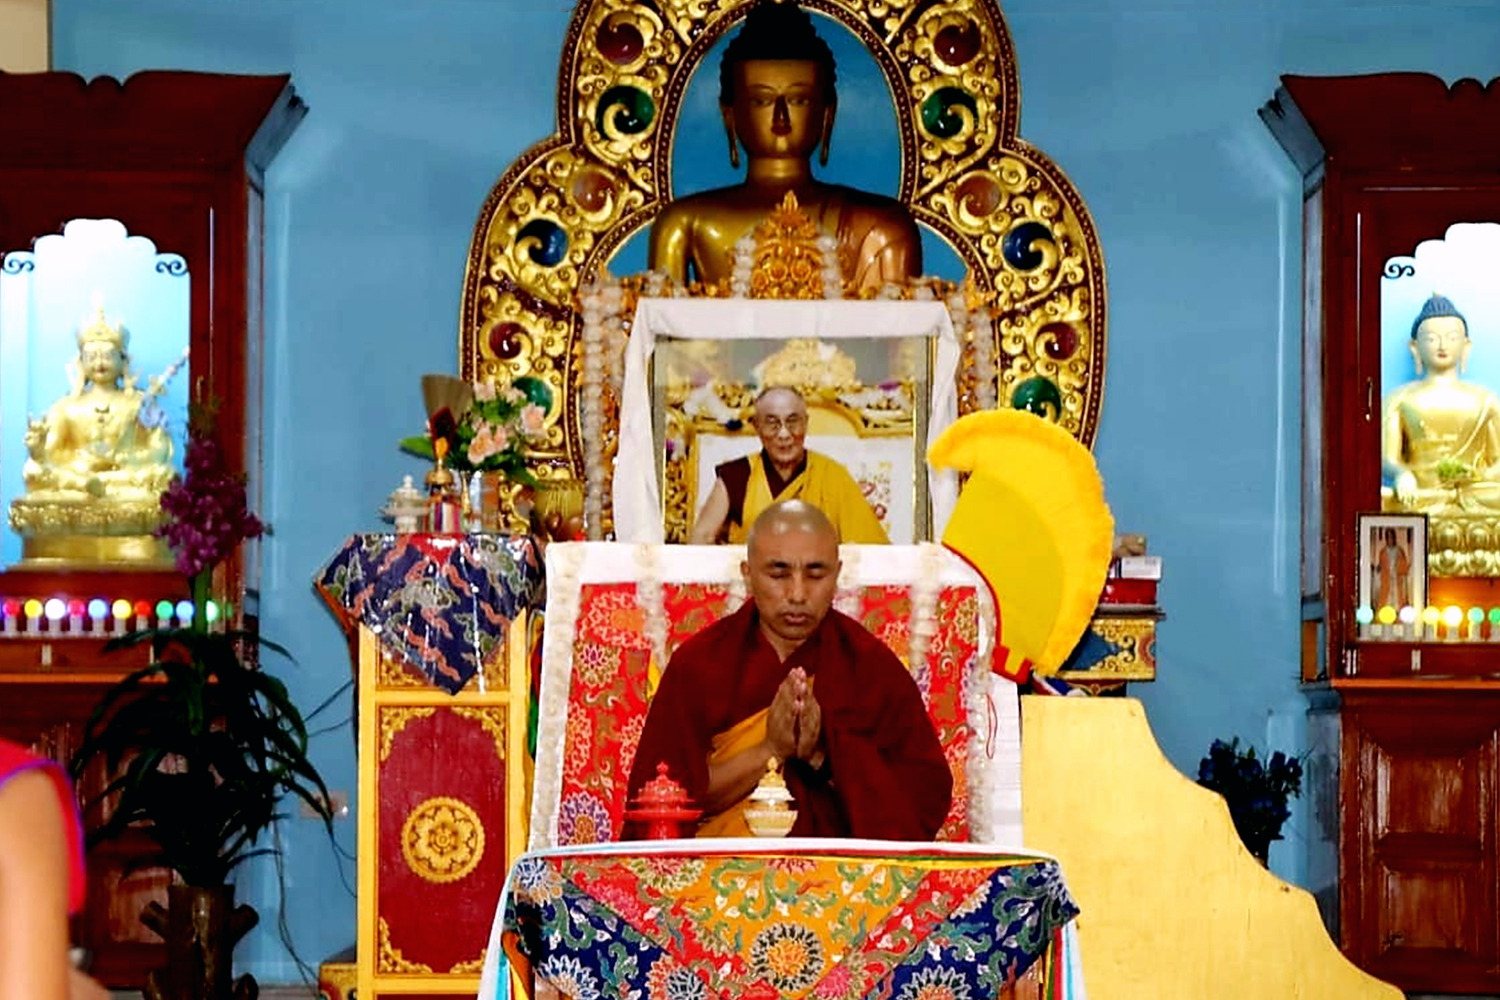 Abbot (Khenpo) Geshe Tsering Nyerna la